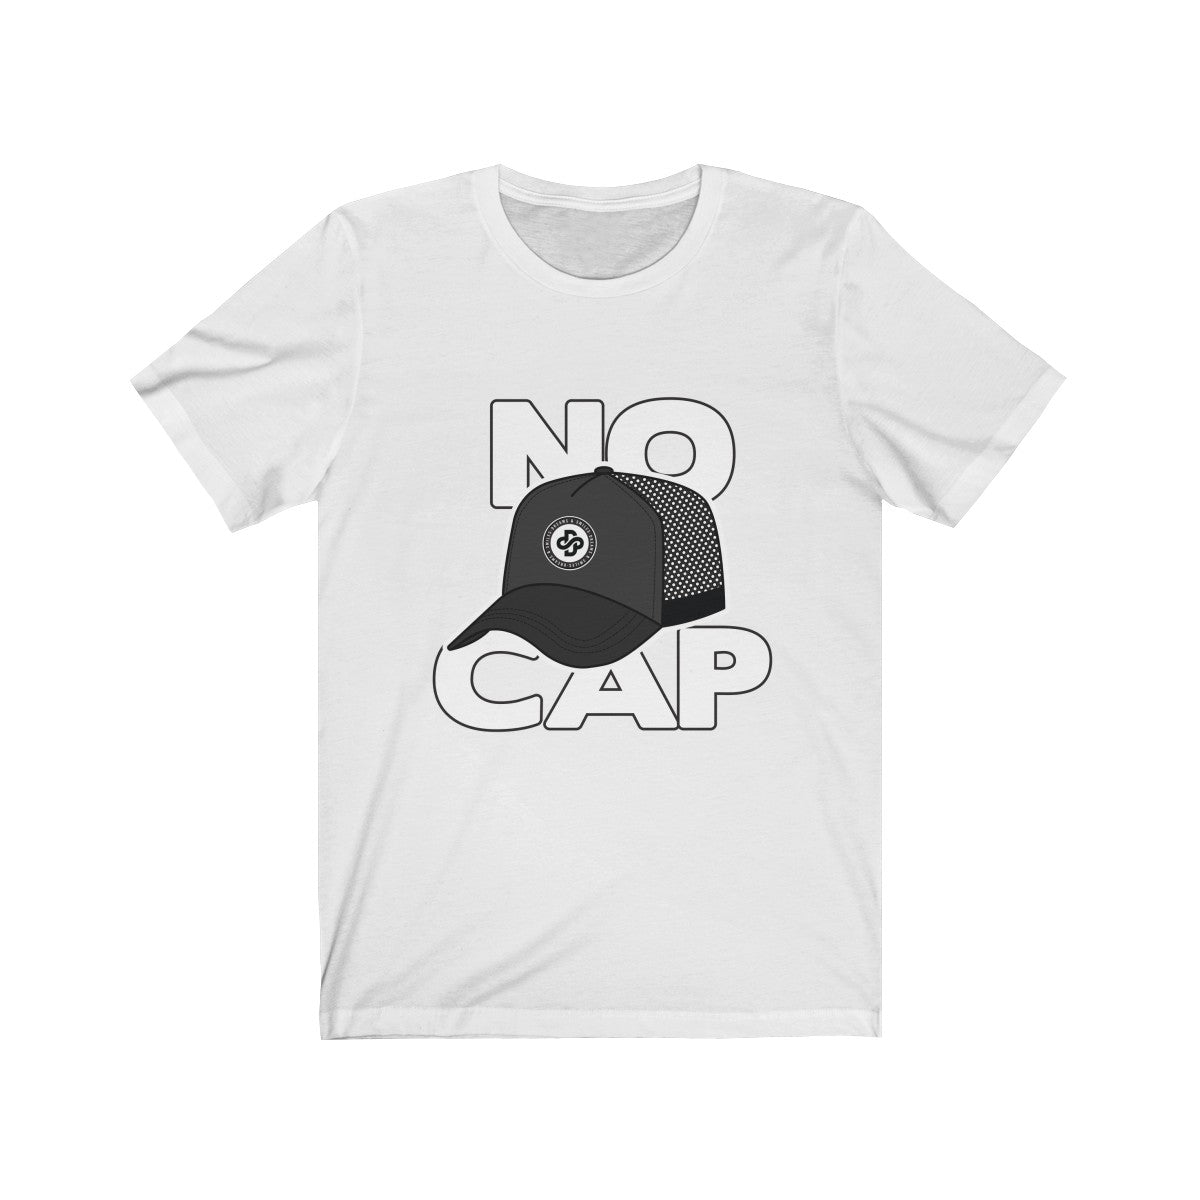 'No Cap' in Black Short Sleeve Tee